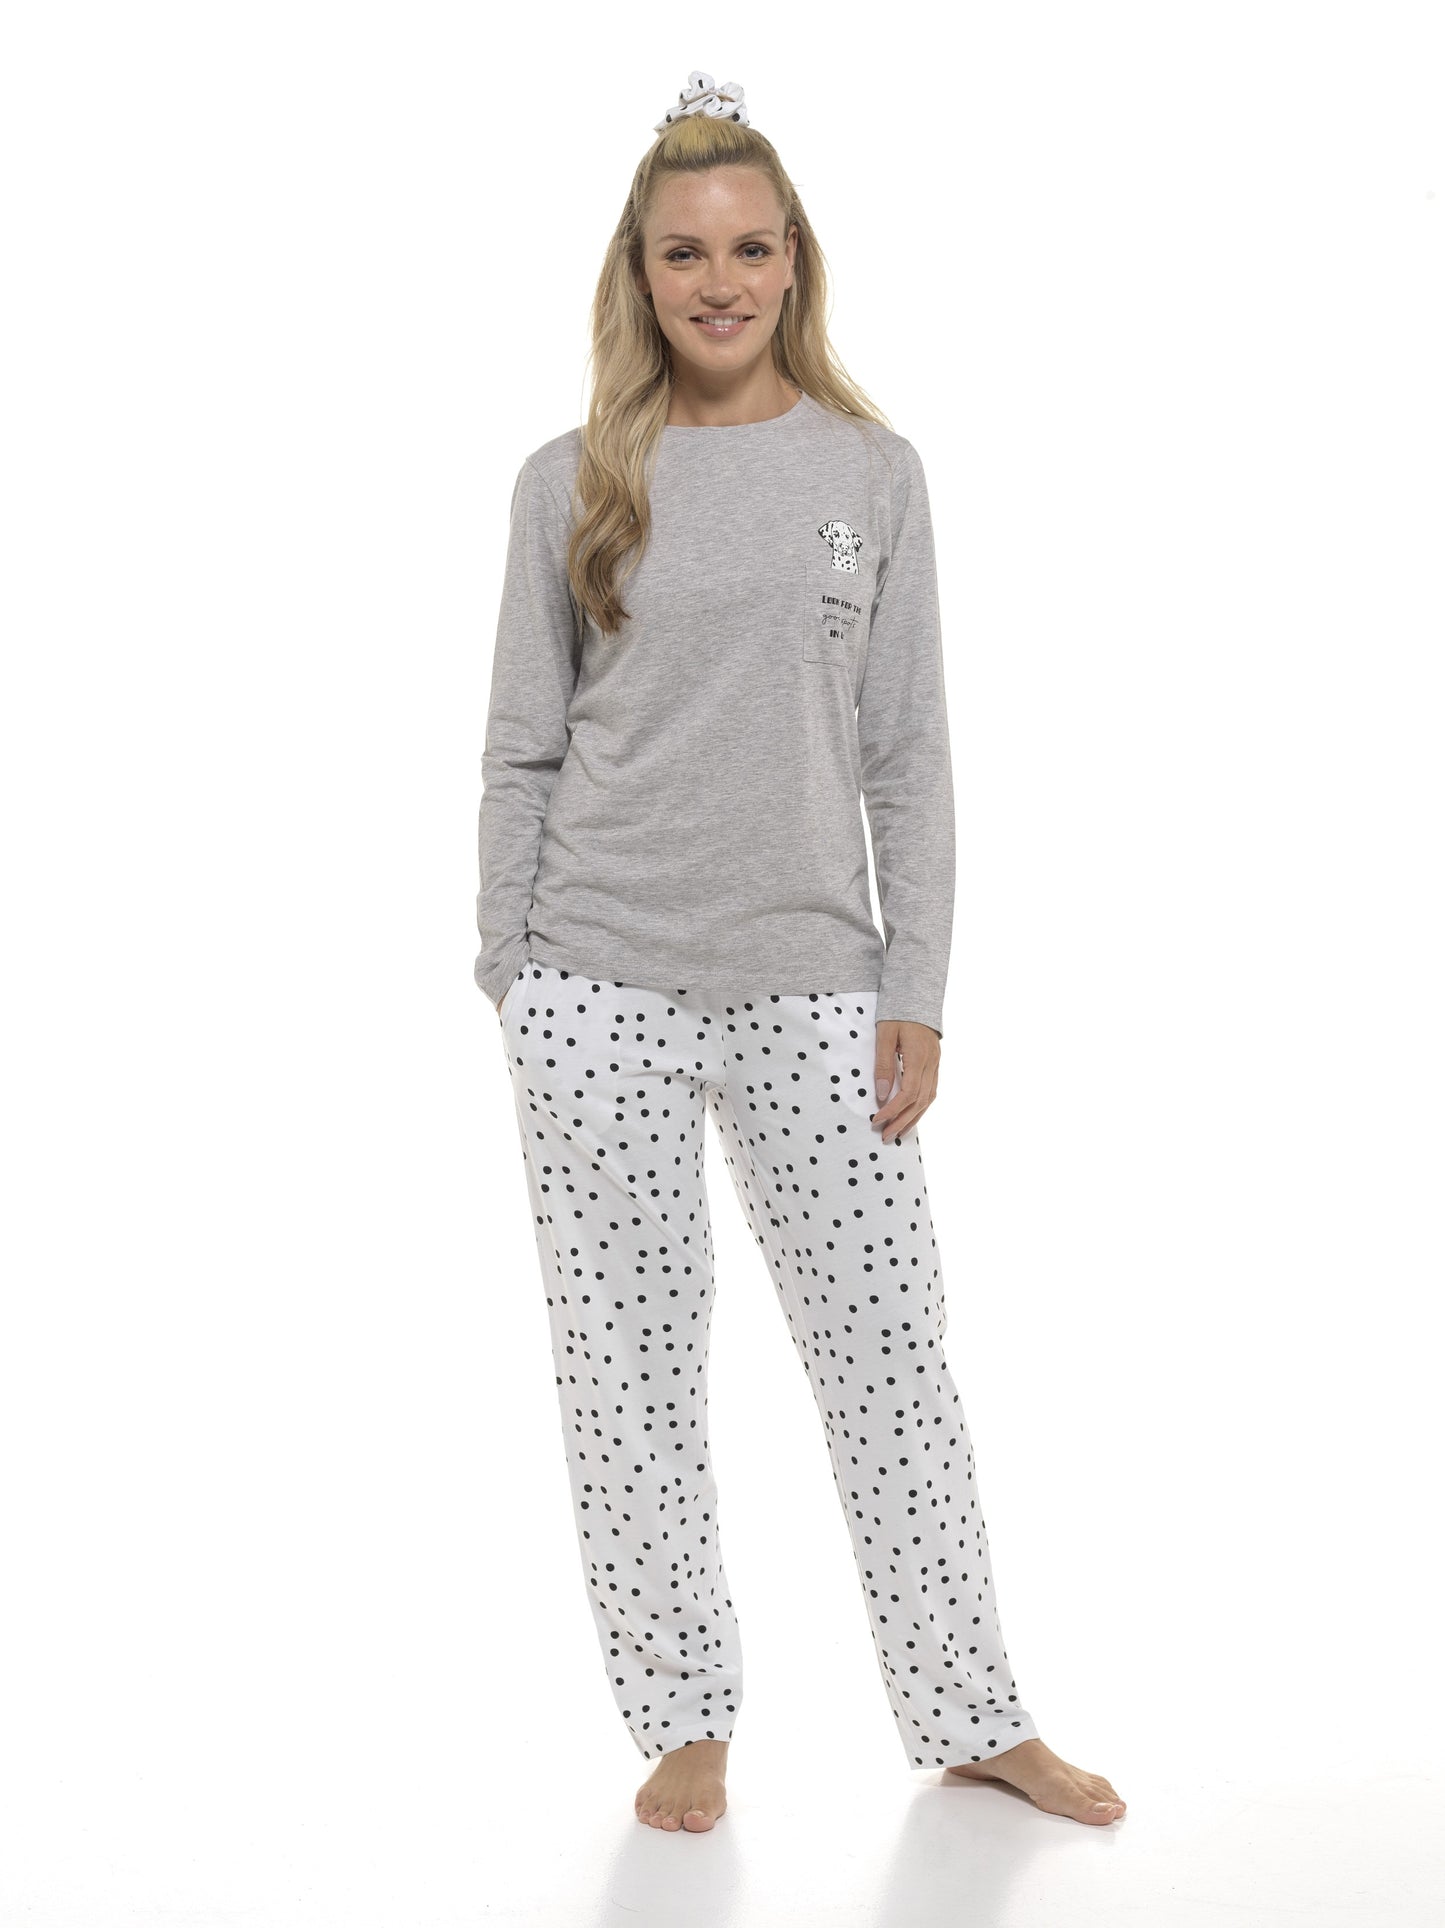 Ladies Dalmatian Dog Print Cotton Pyjamas with Matching Scrunchie Set